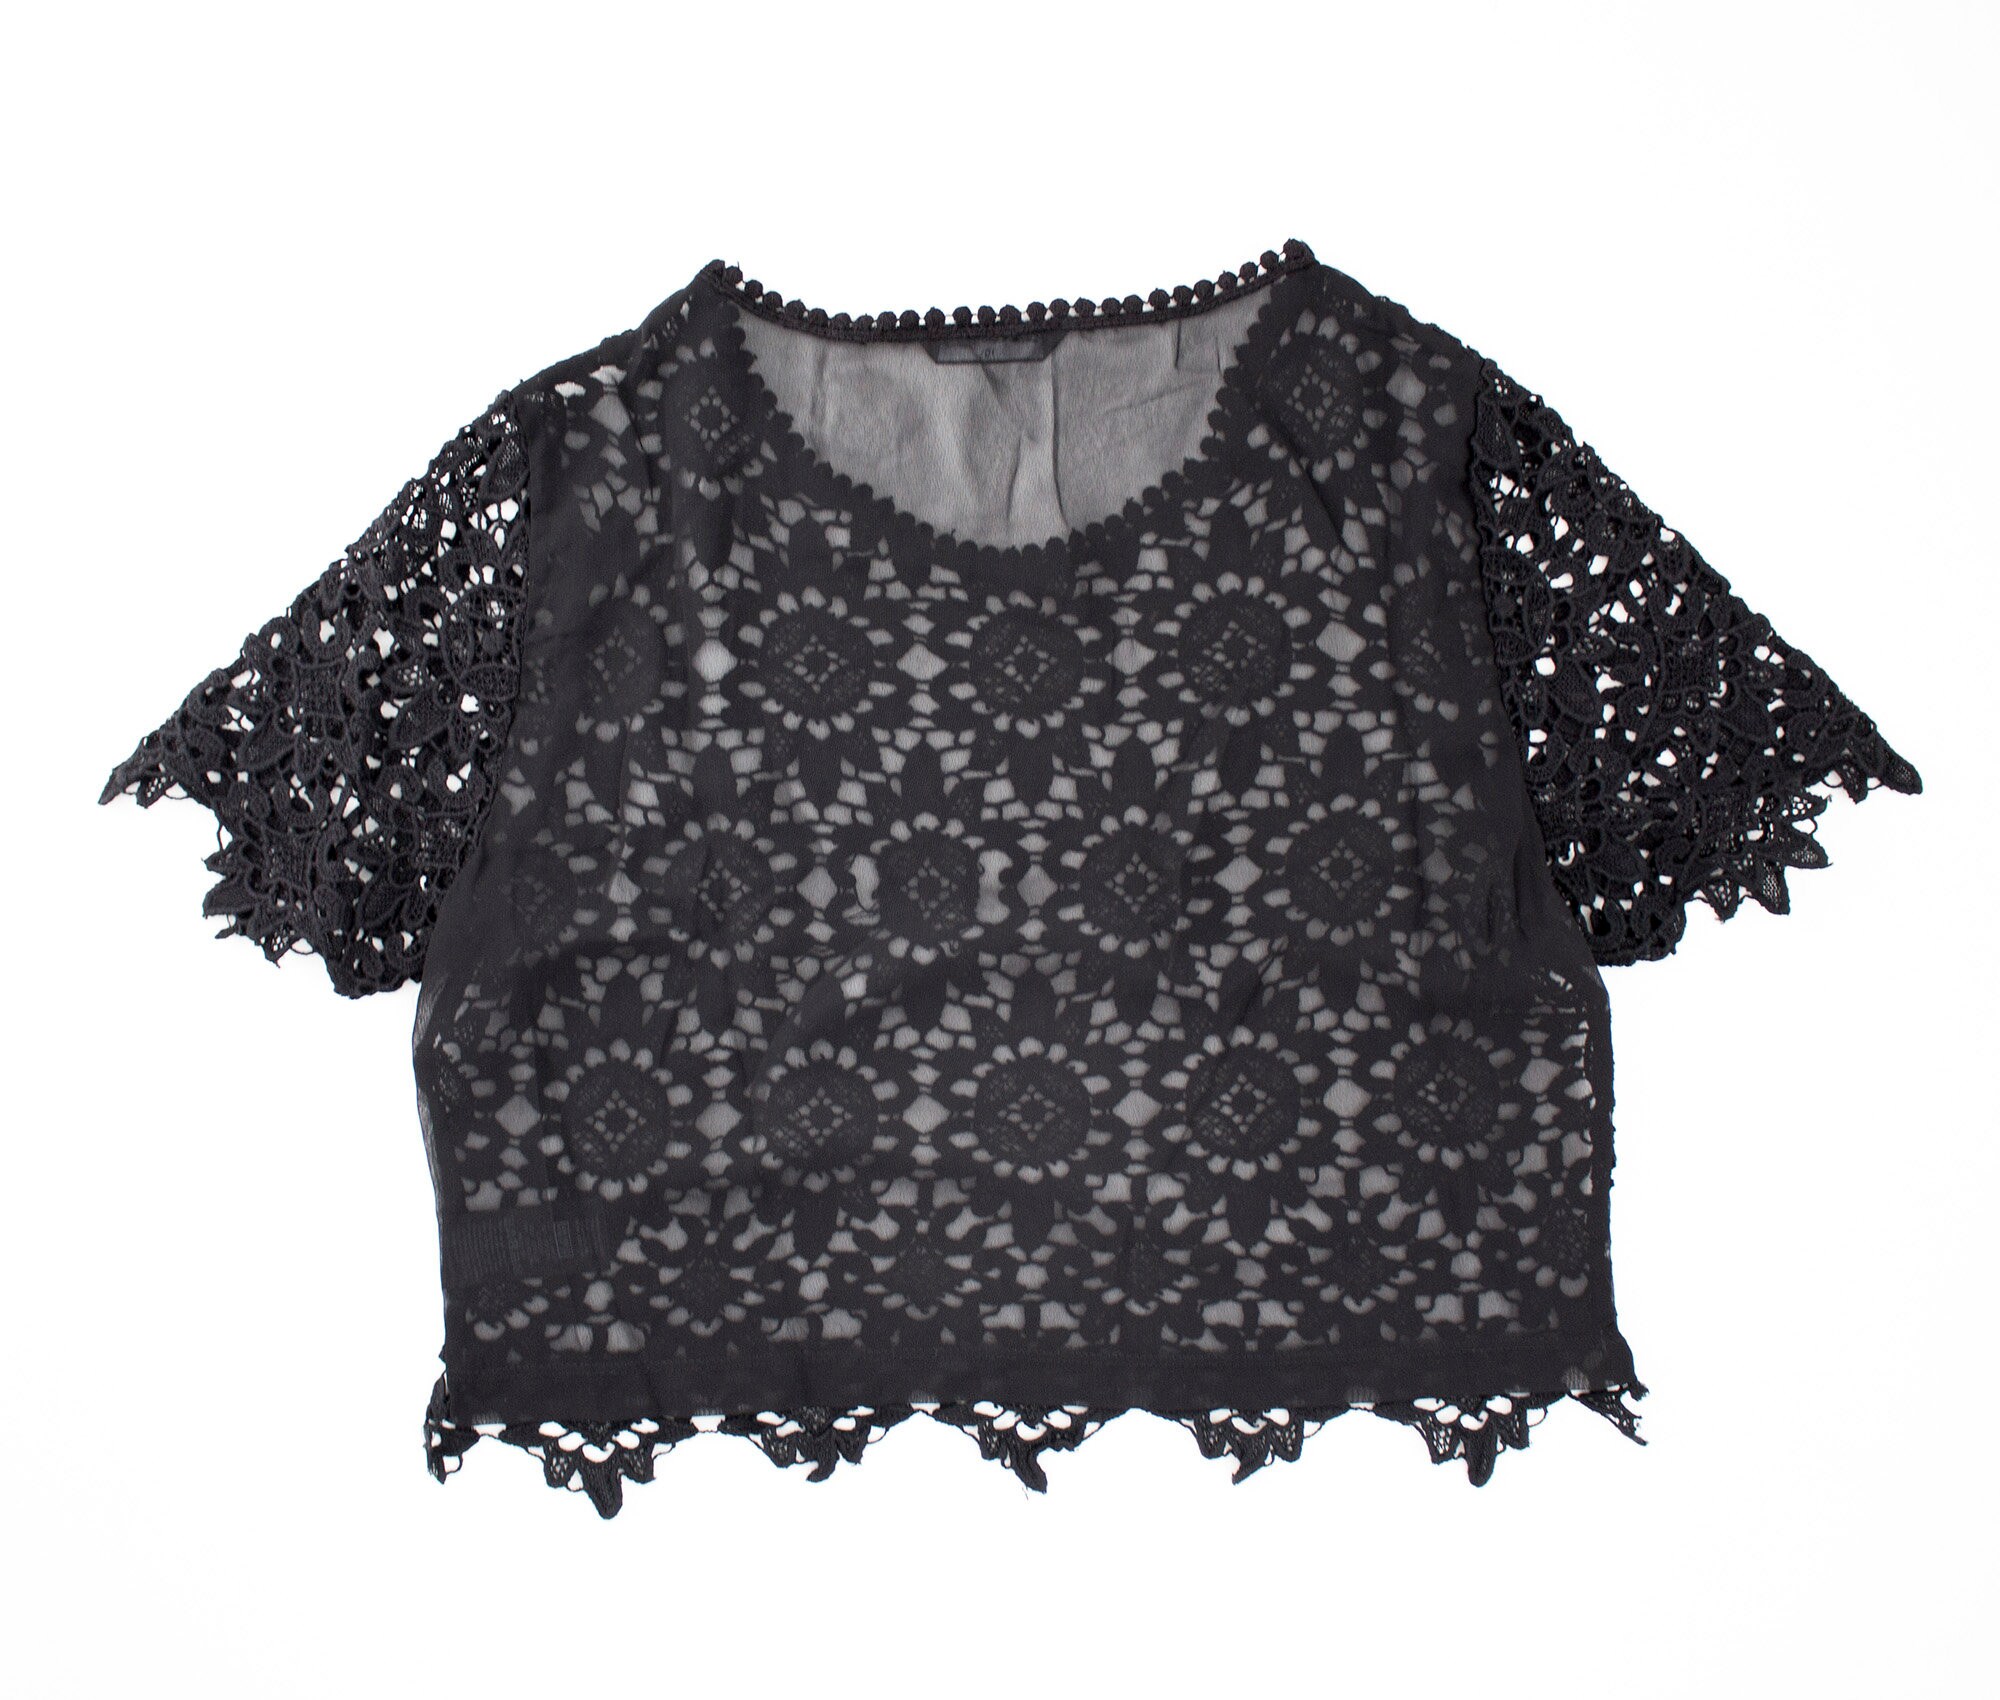 Peek a Boo Black Crochet Crop Top Daisy Floral Lace Top - Etsy UK